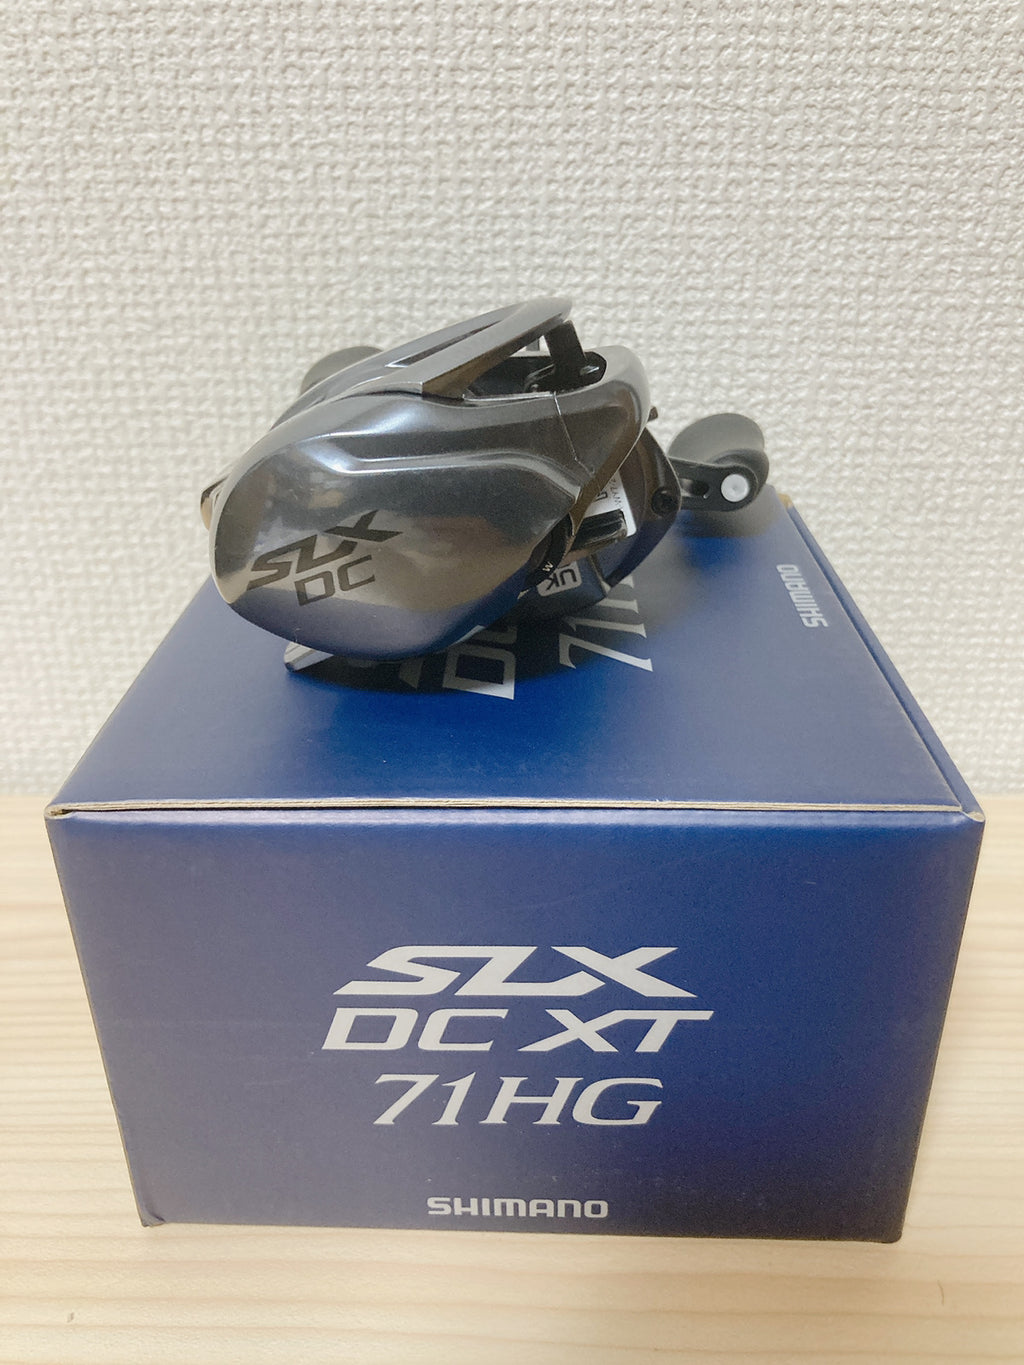 Shimano Baitcasting Reel 22 SLX DC XT 71HG Left Gear Ratio 7.4:1 IN BOX